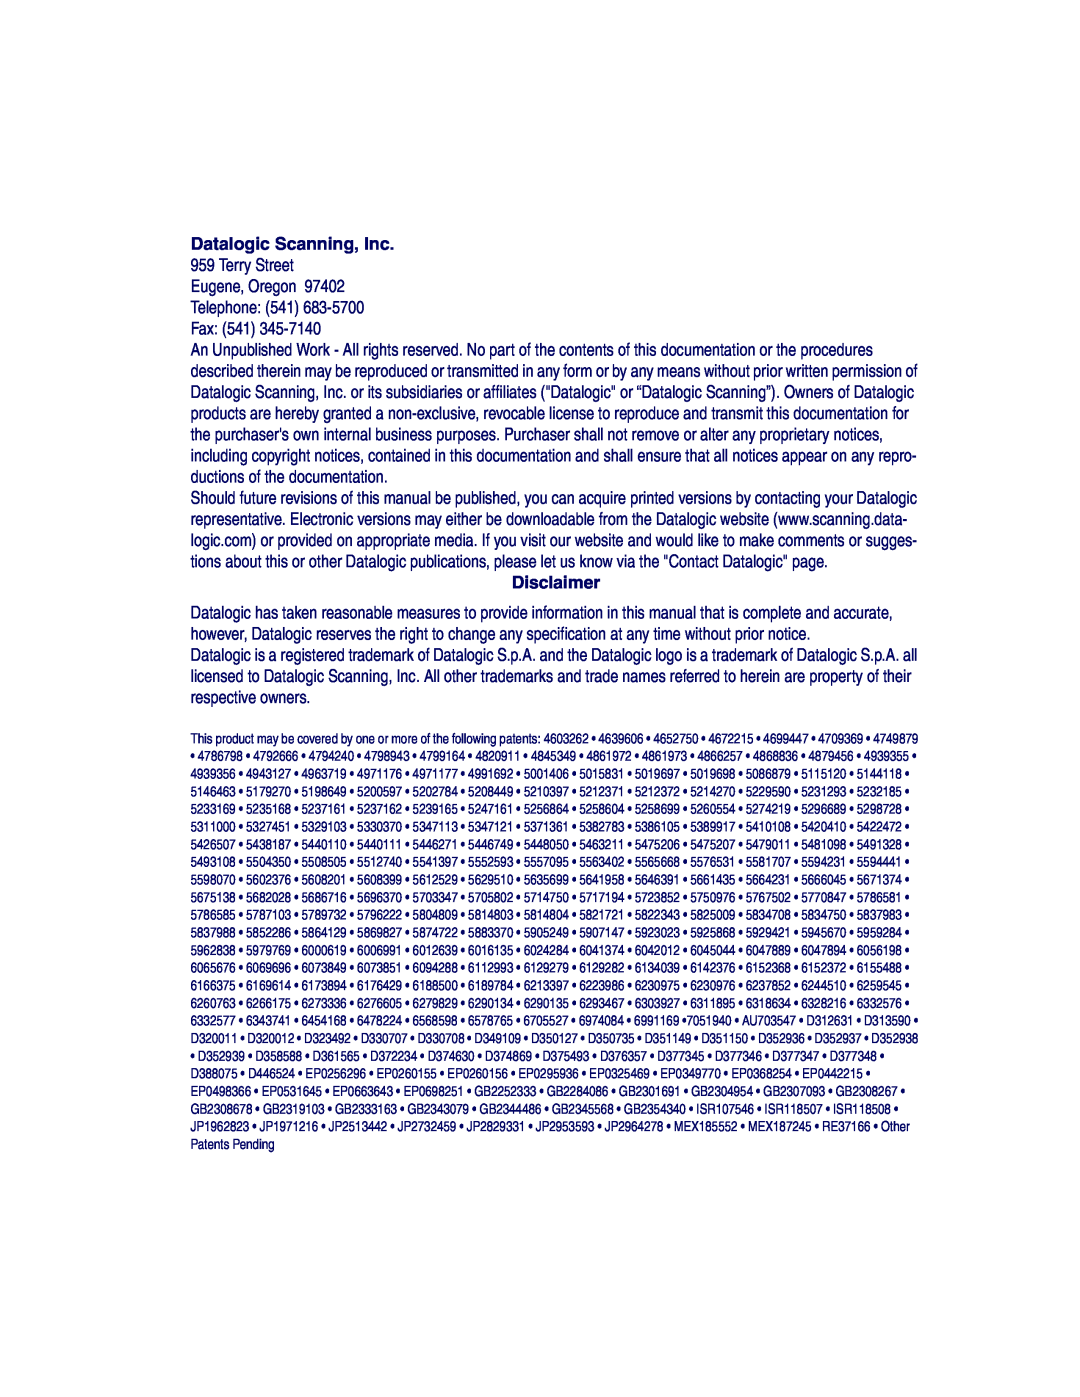 Datalogic Scanning SR, XLR, HD manual Datalogic Scanning, Inc, Disclaimer 